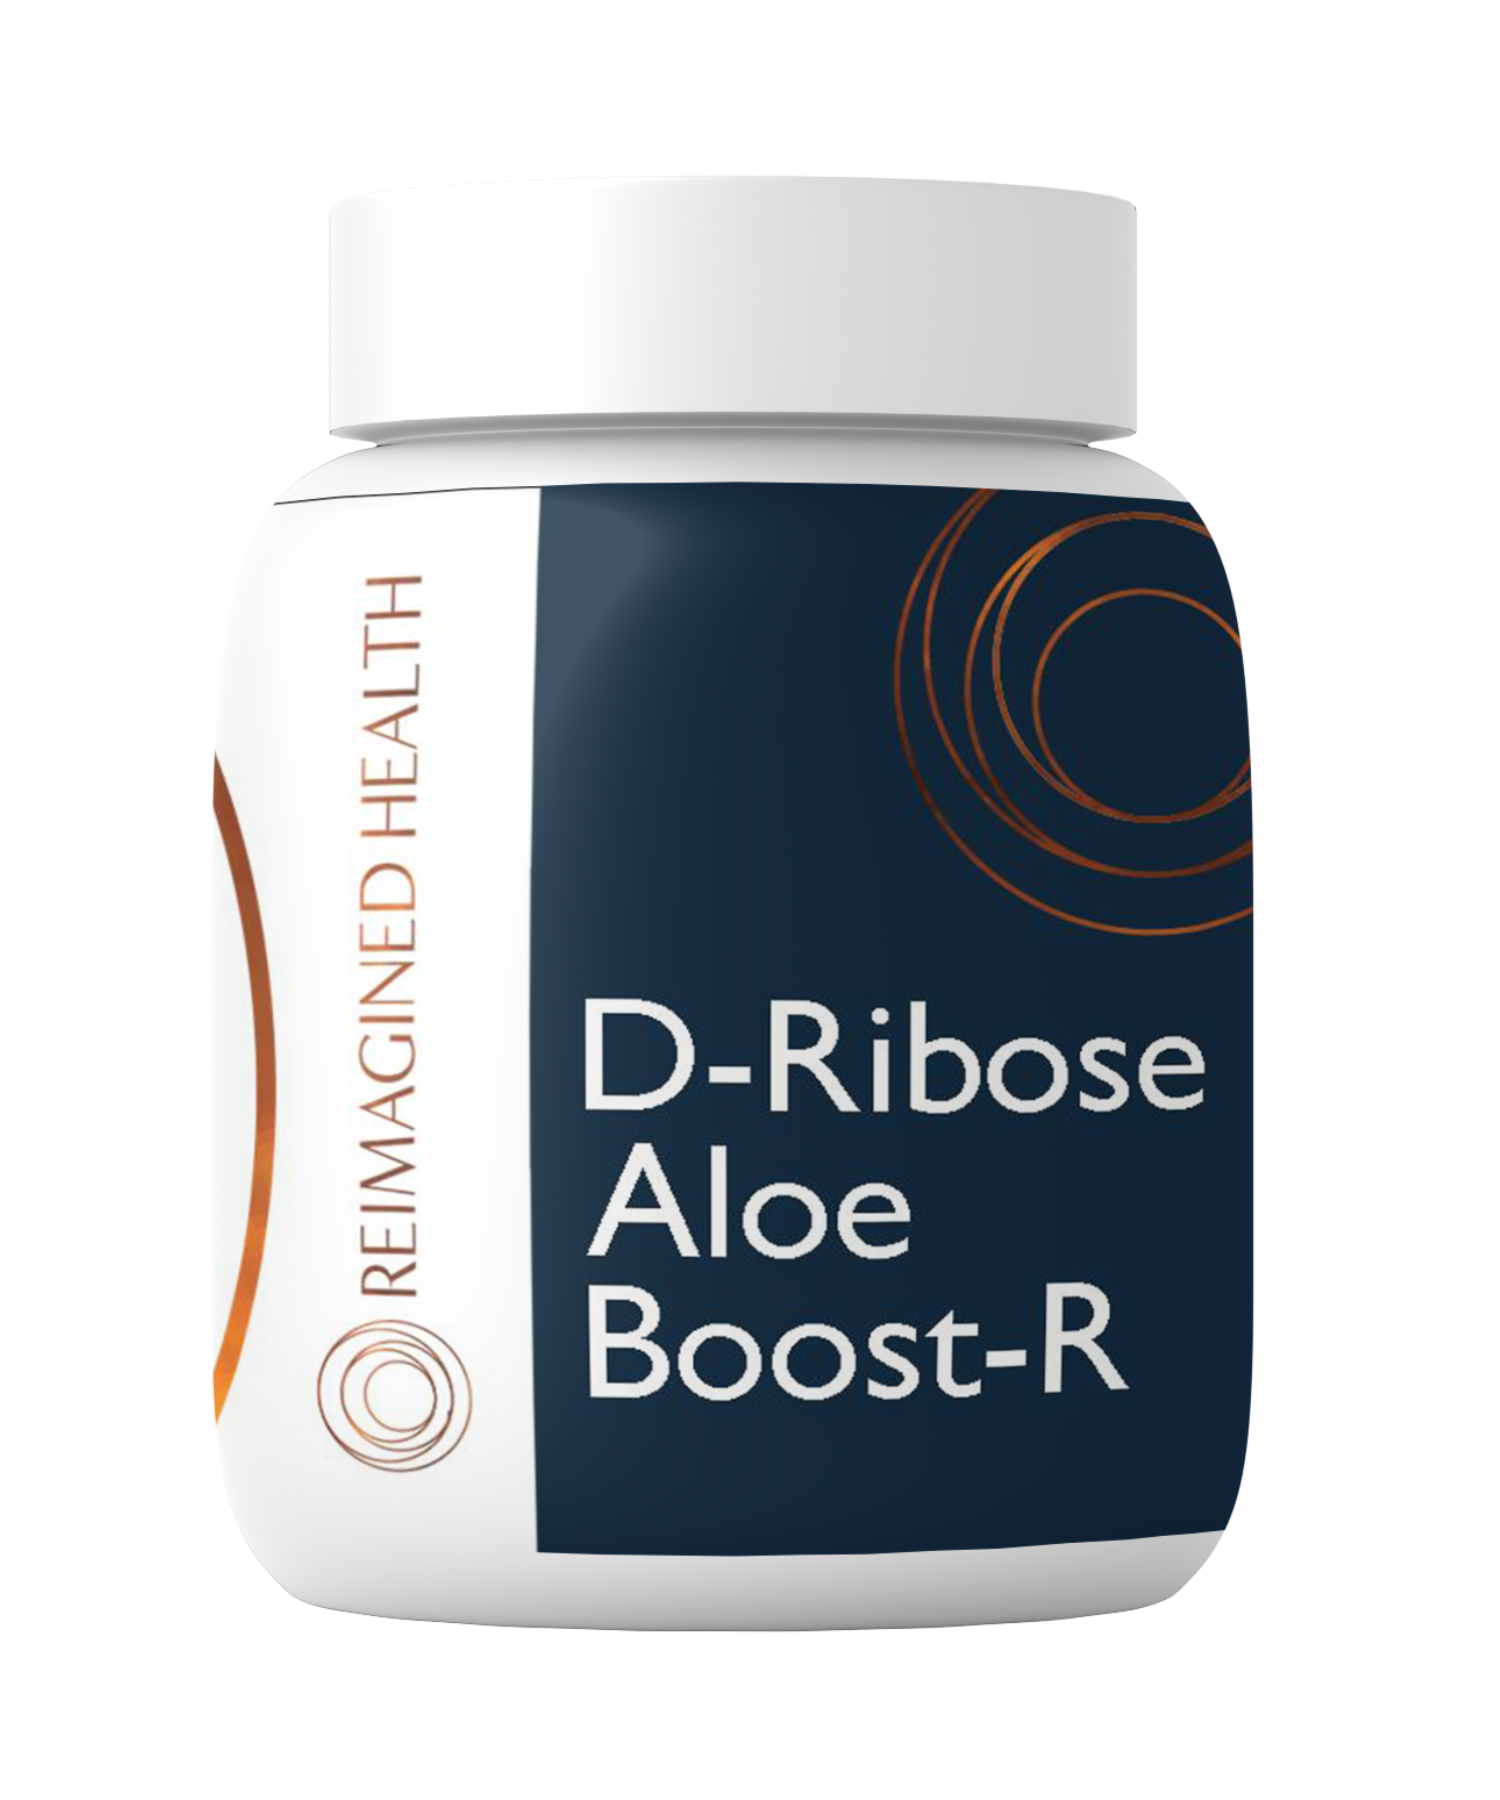 D-Ribose-Aloe-Boost-R-C189-1-1.png